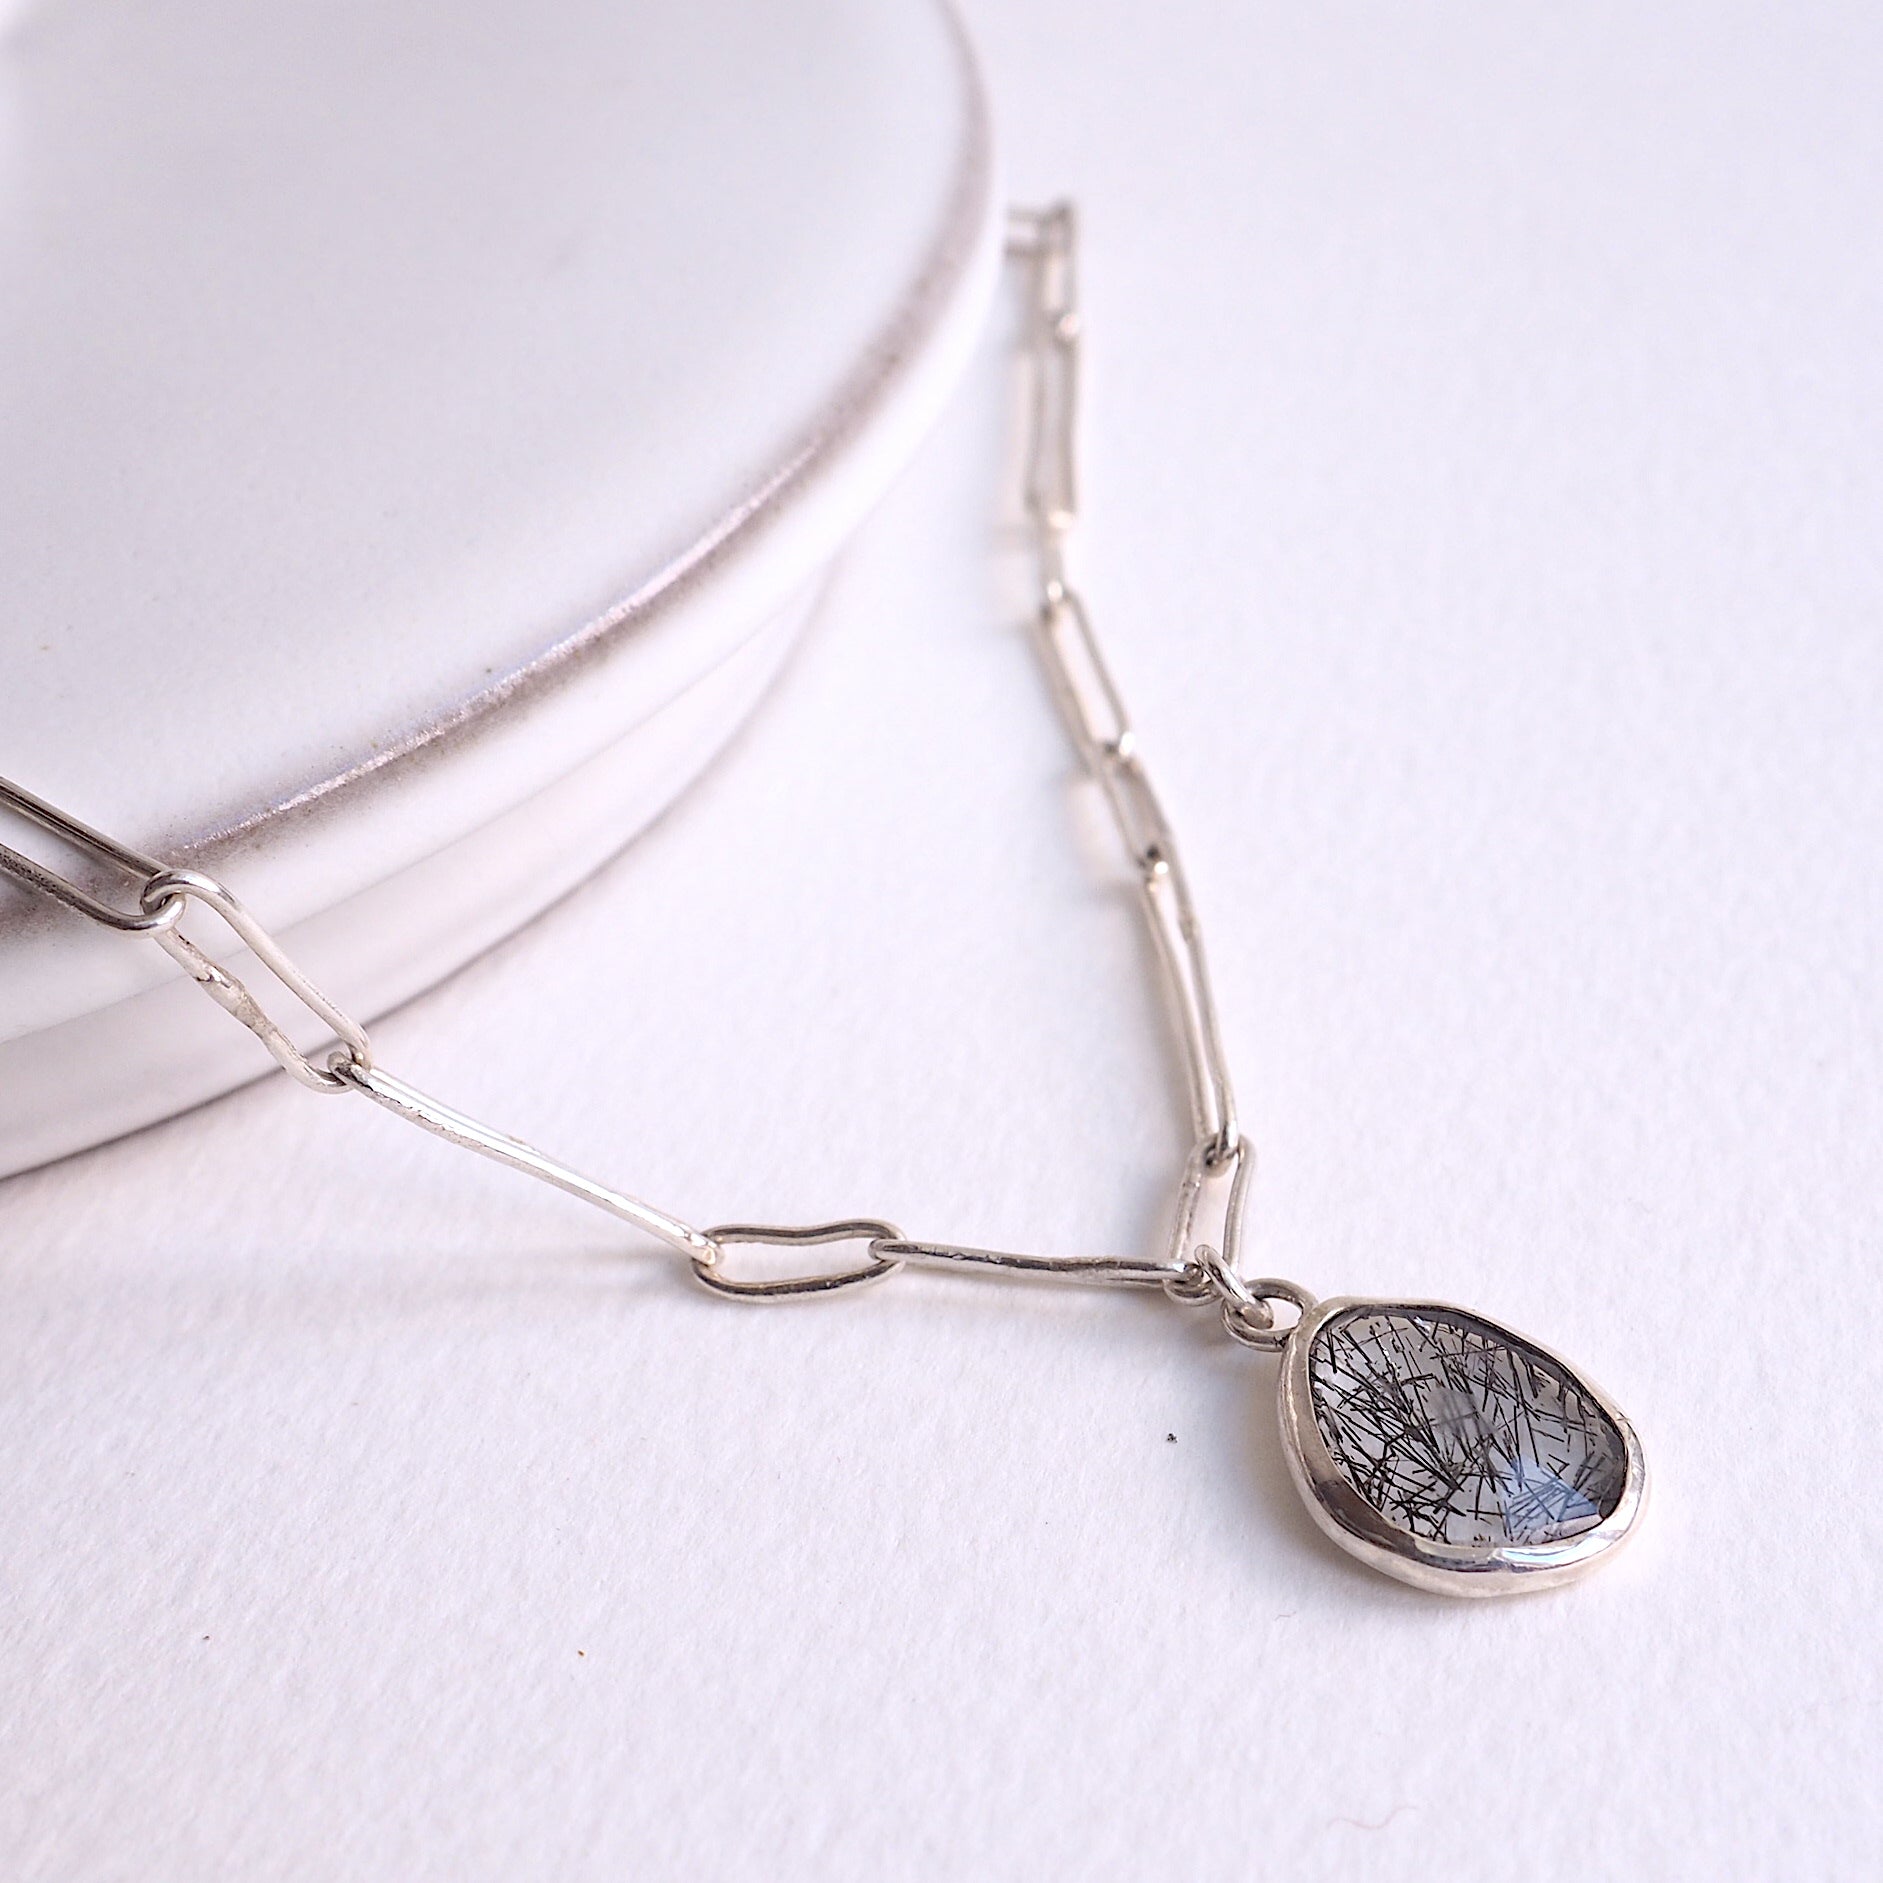 Jewellery jewelry necklace silver gold stone precious custom unique bespoke handmade handcrafted